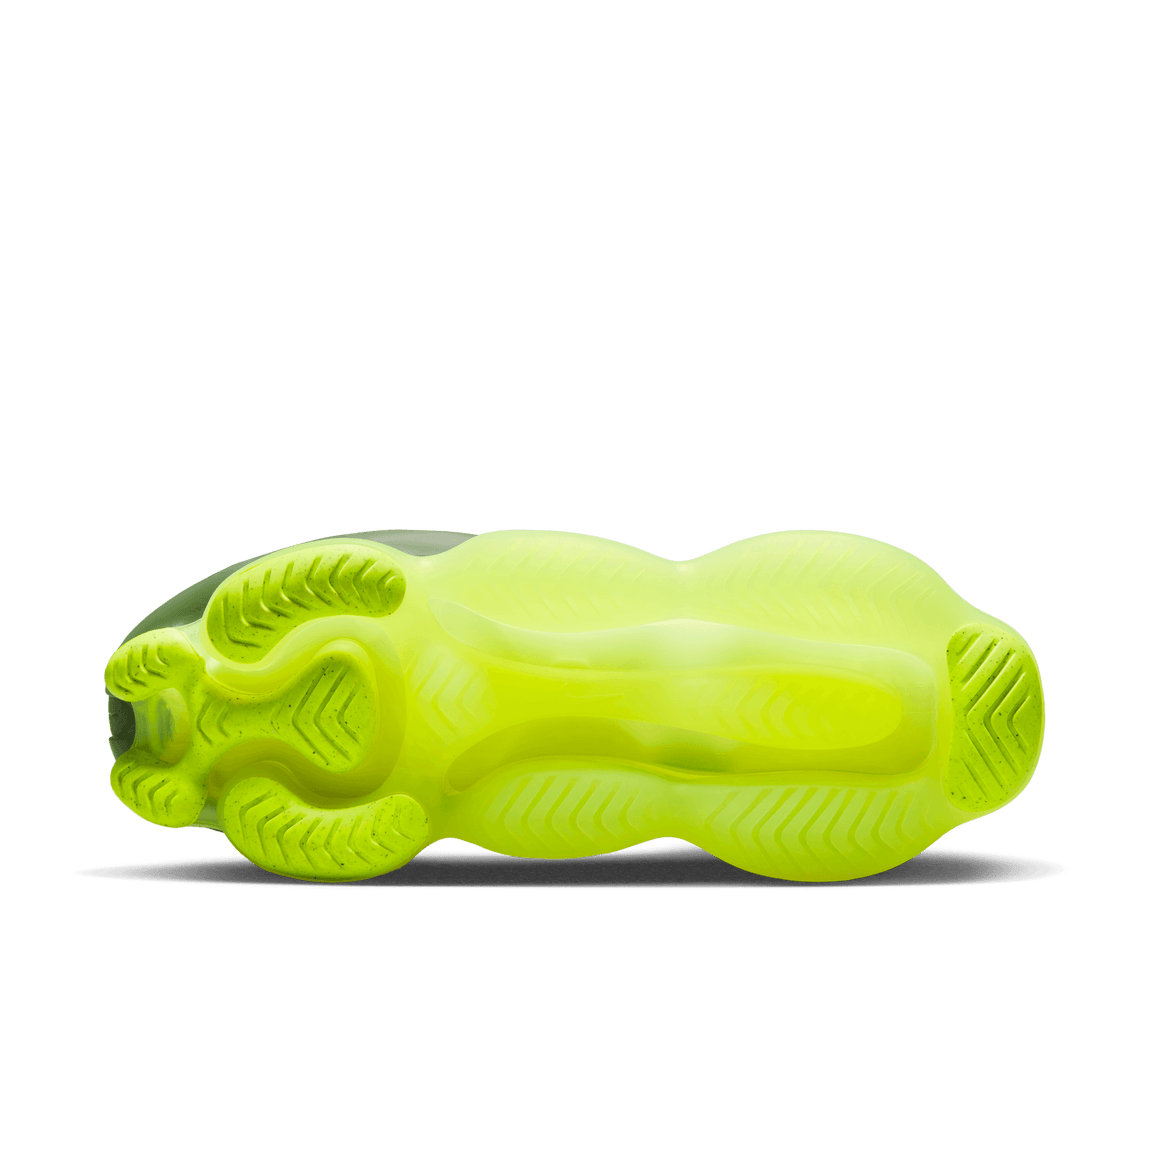 Nike Air Max Scorpion Flyknit (Jade Horizon/Barely Volt-Cargo Khaki) - Nike Air Max Scorpion Flyknit (Jade Horizon/Barely Volt-Cargo Khaki) - 